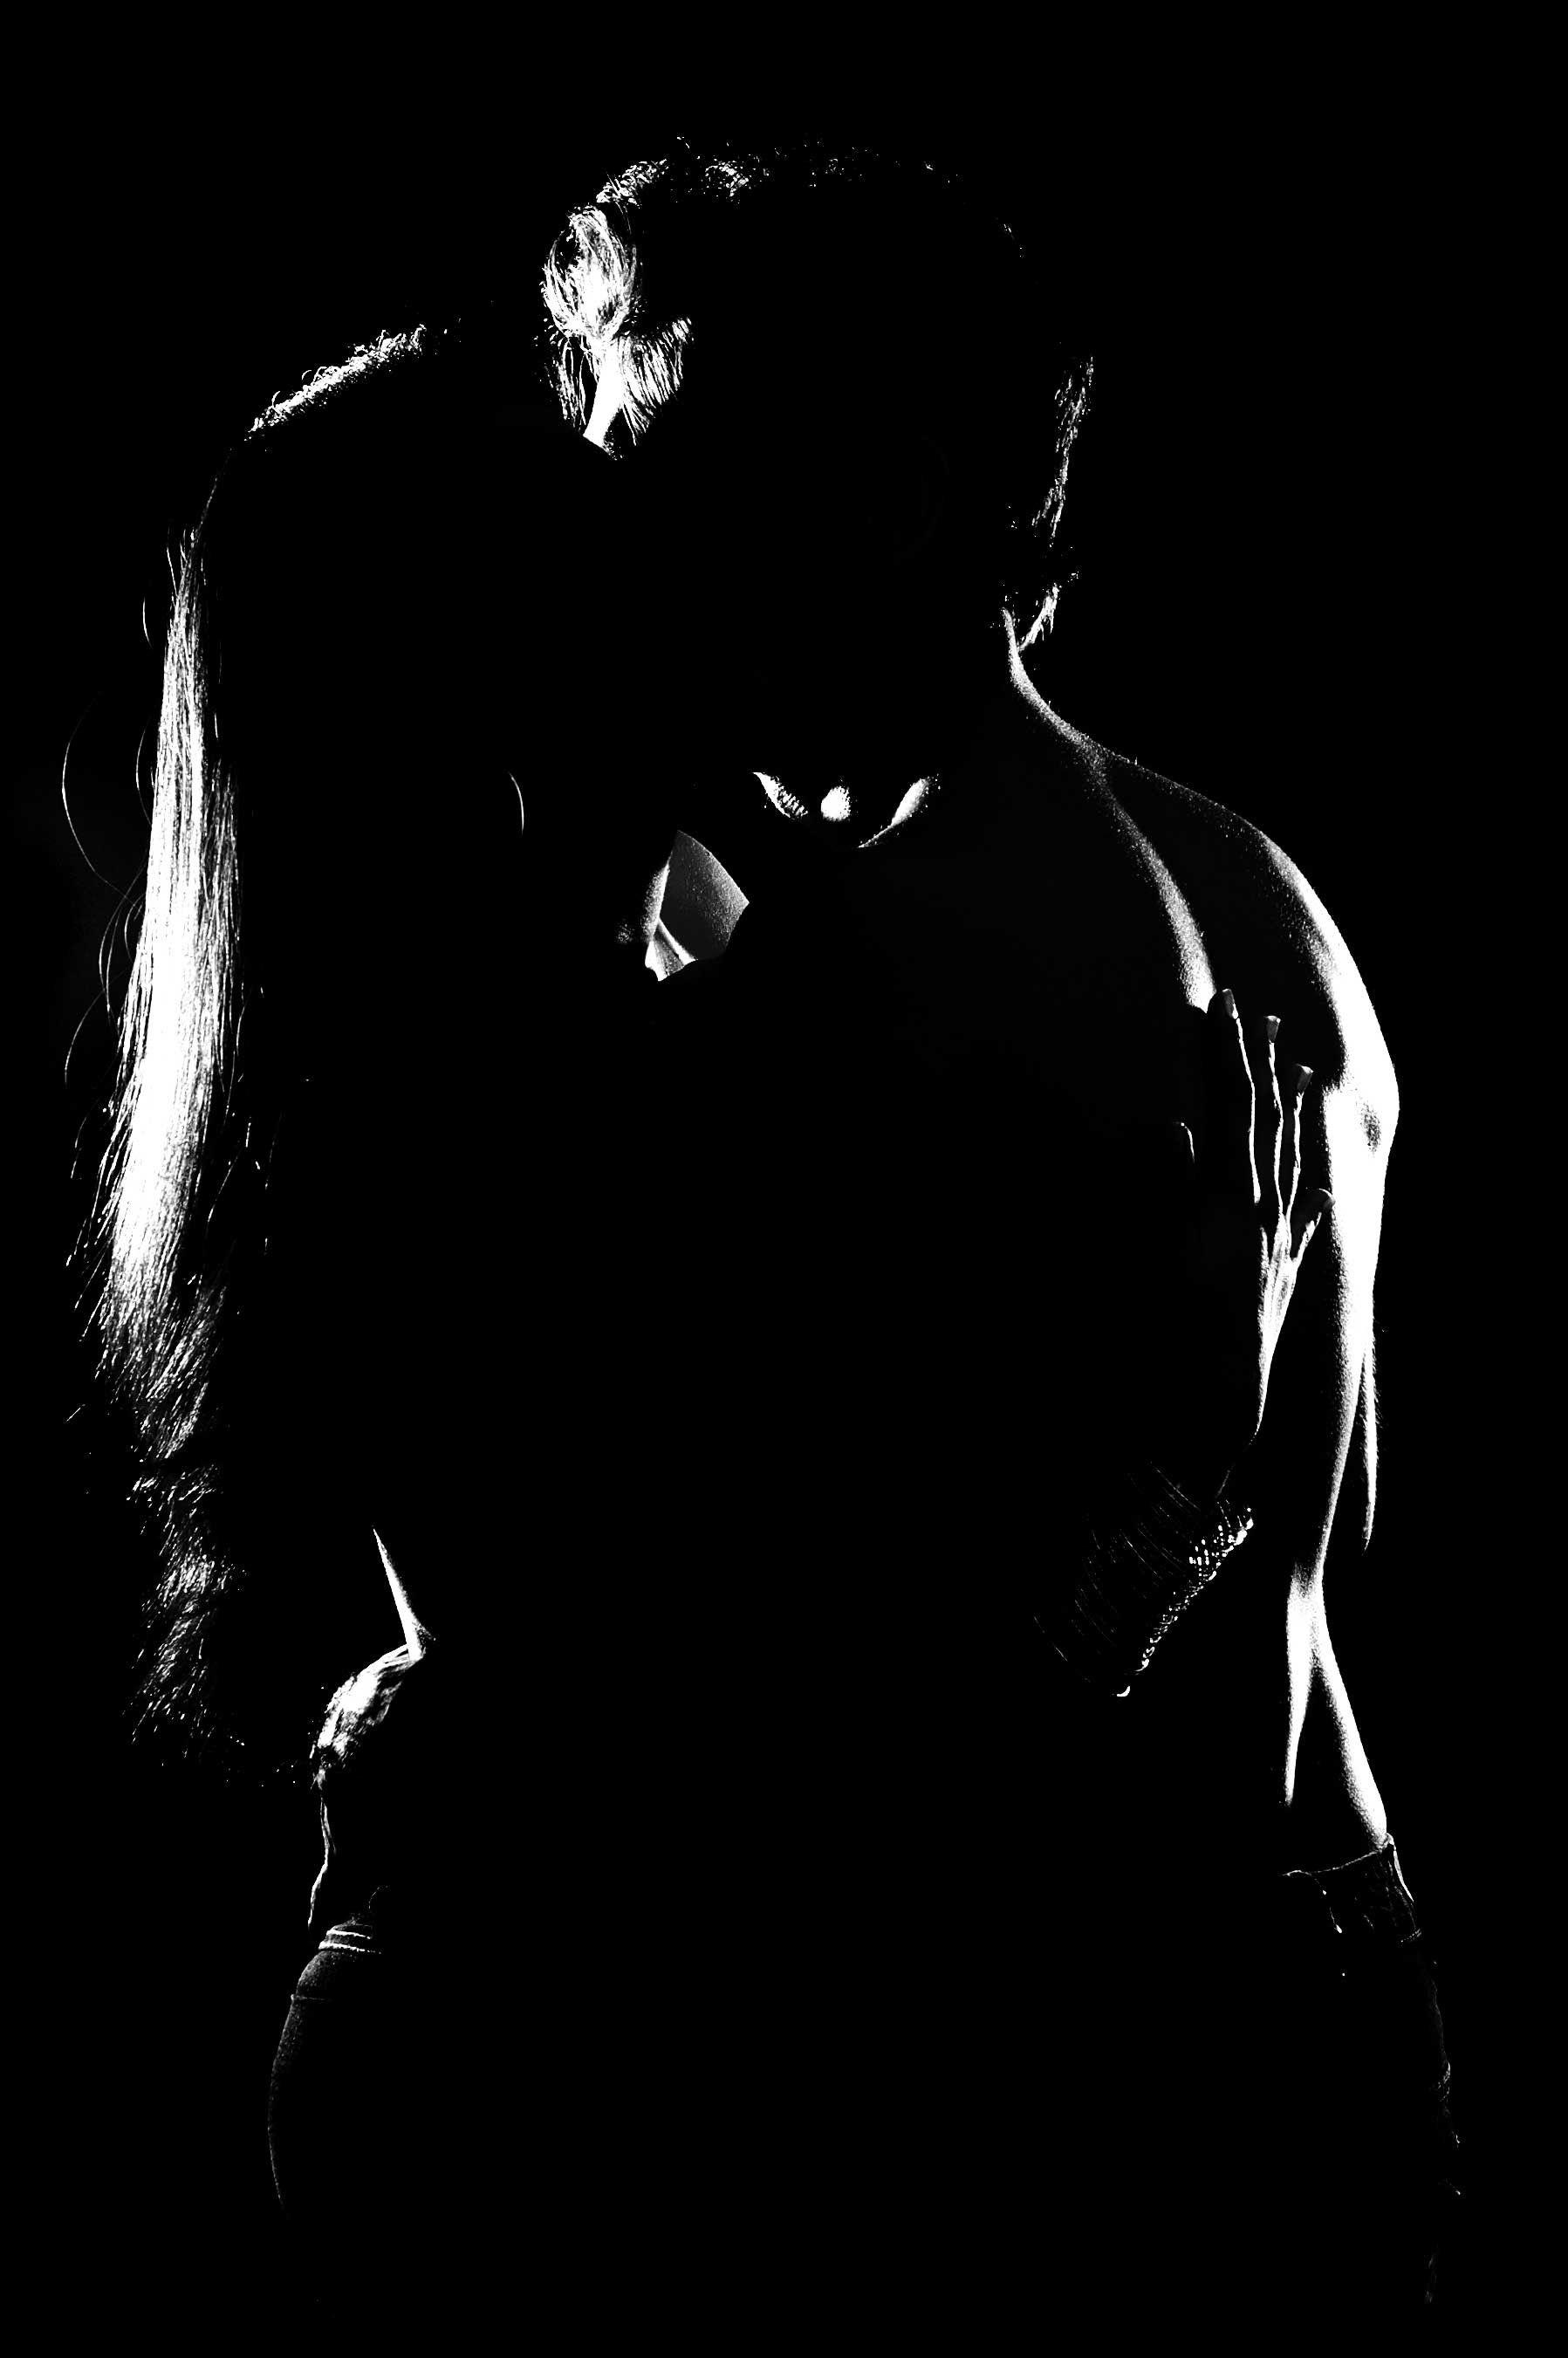 hot couple kissing image. Fotografie, Silhouet